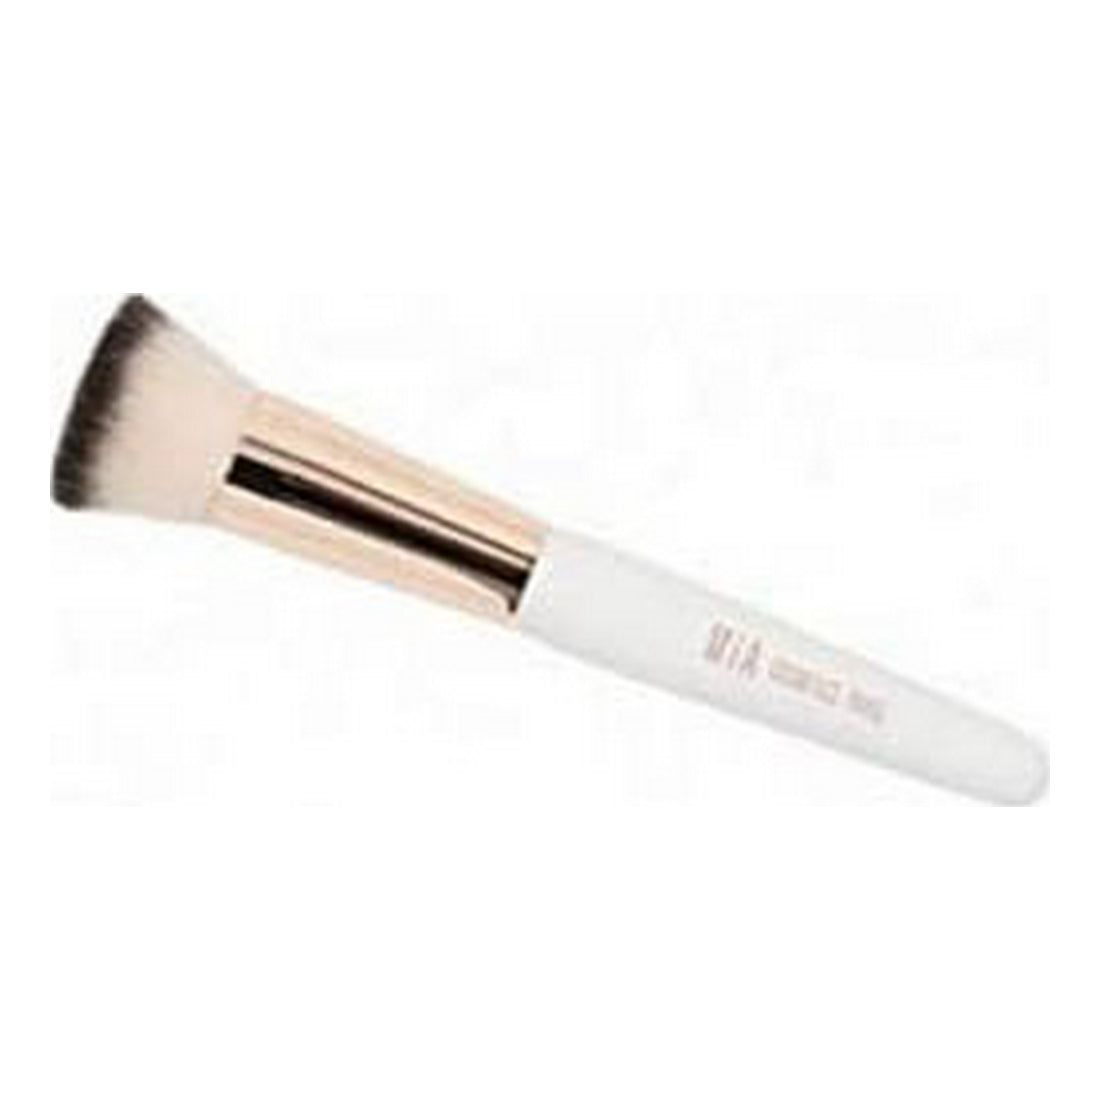 Make-up Brush Mia Cosmetics Paris 206136